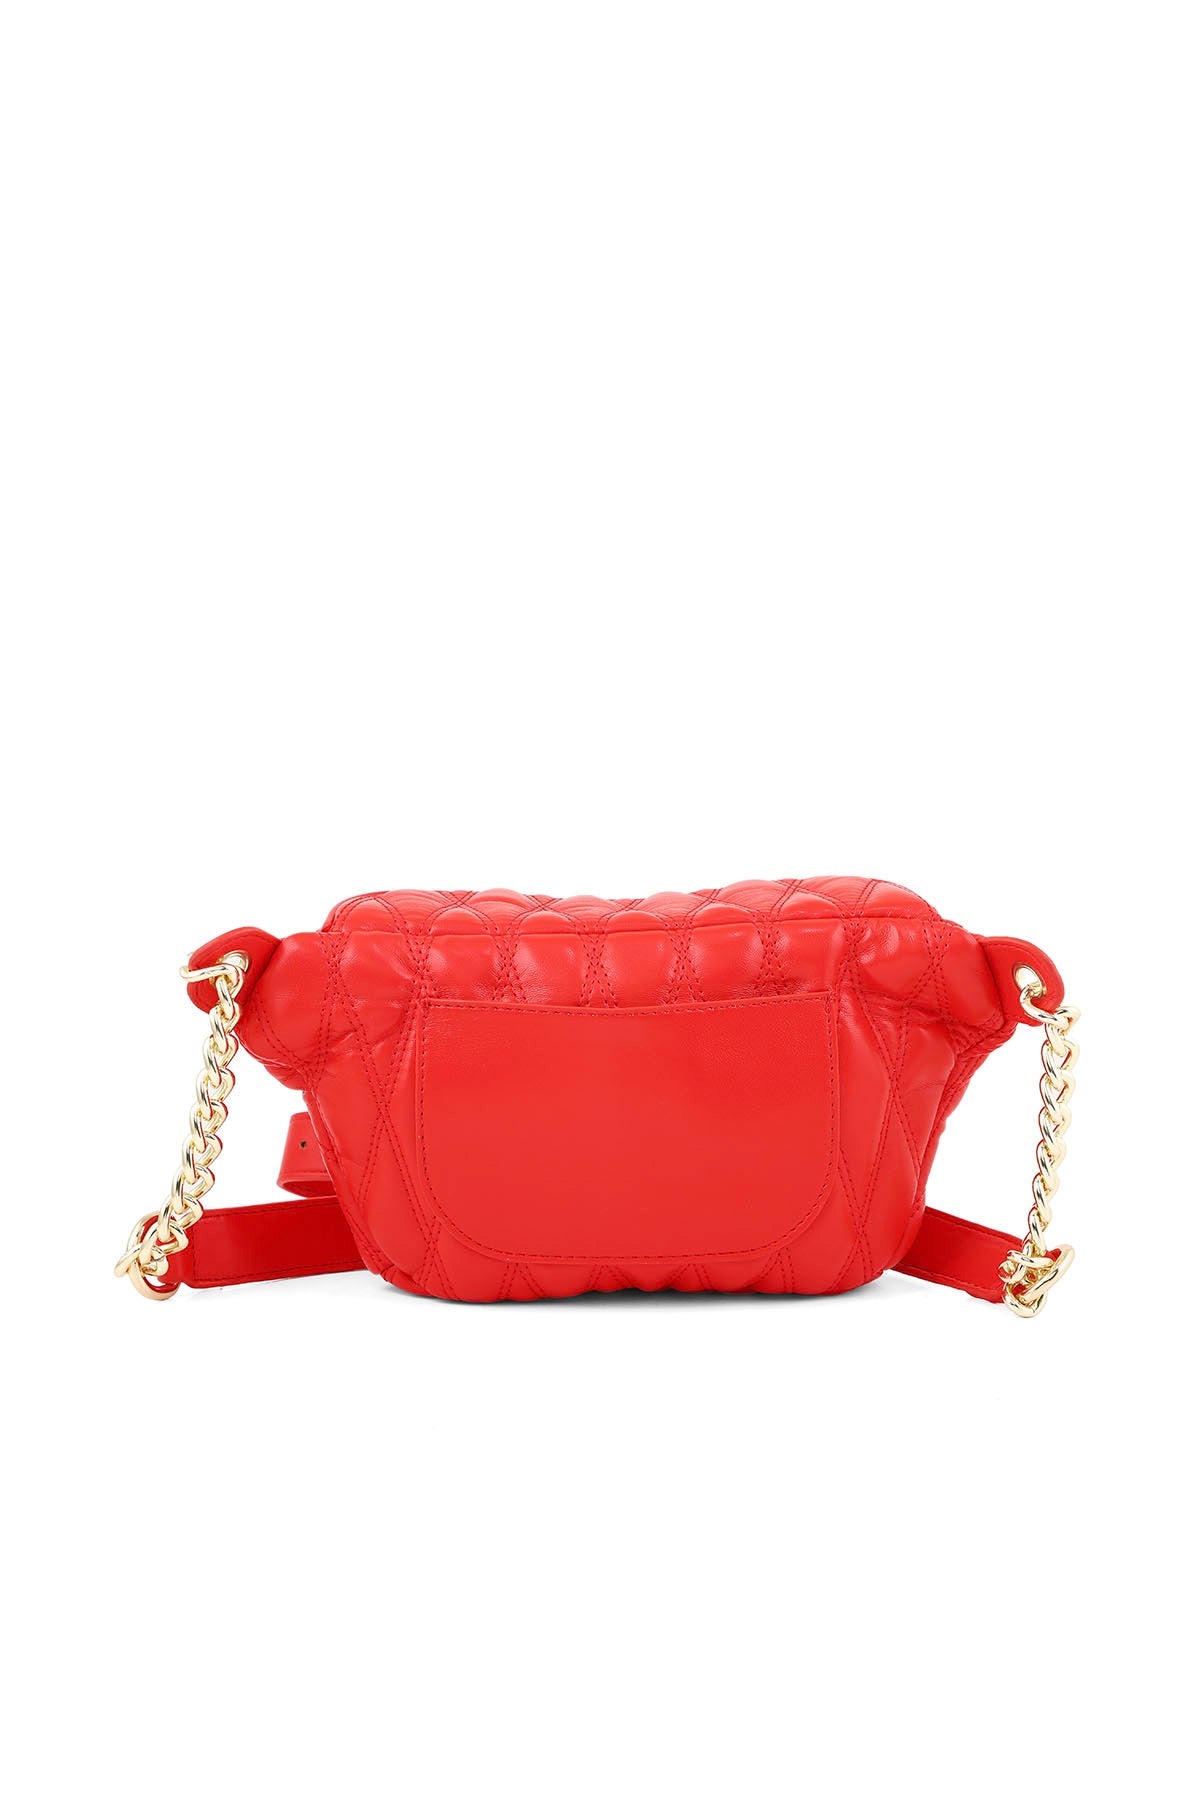 Feny Shoulder Bags B15059-Red